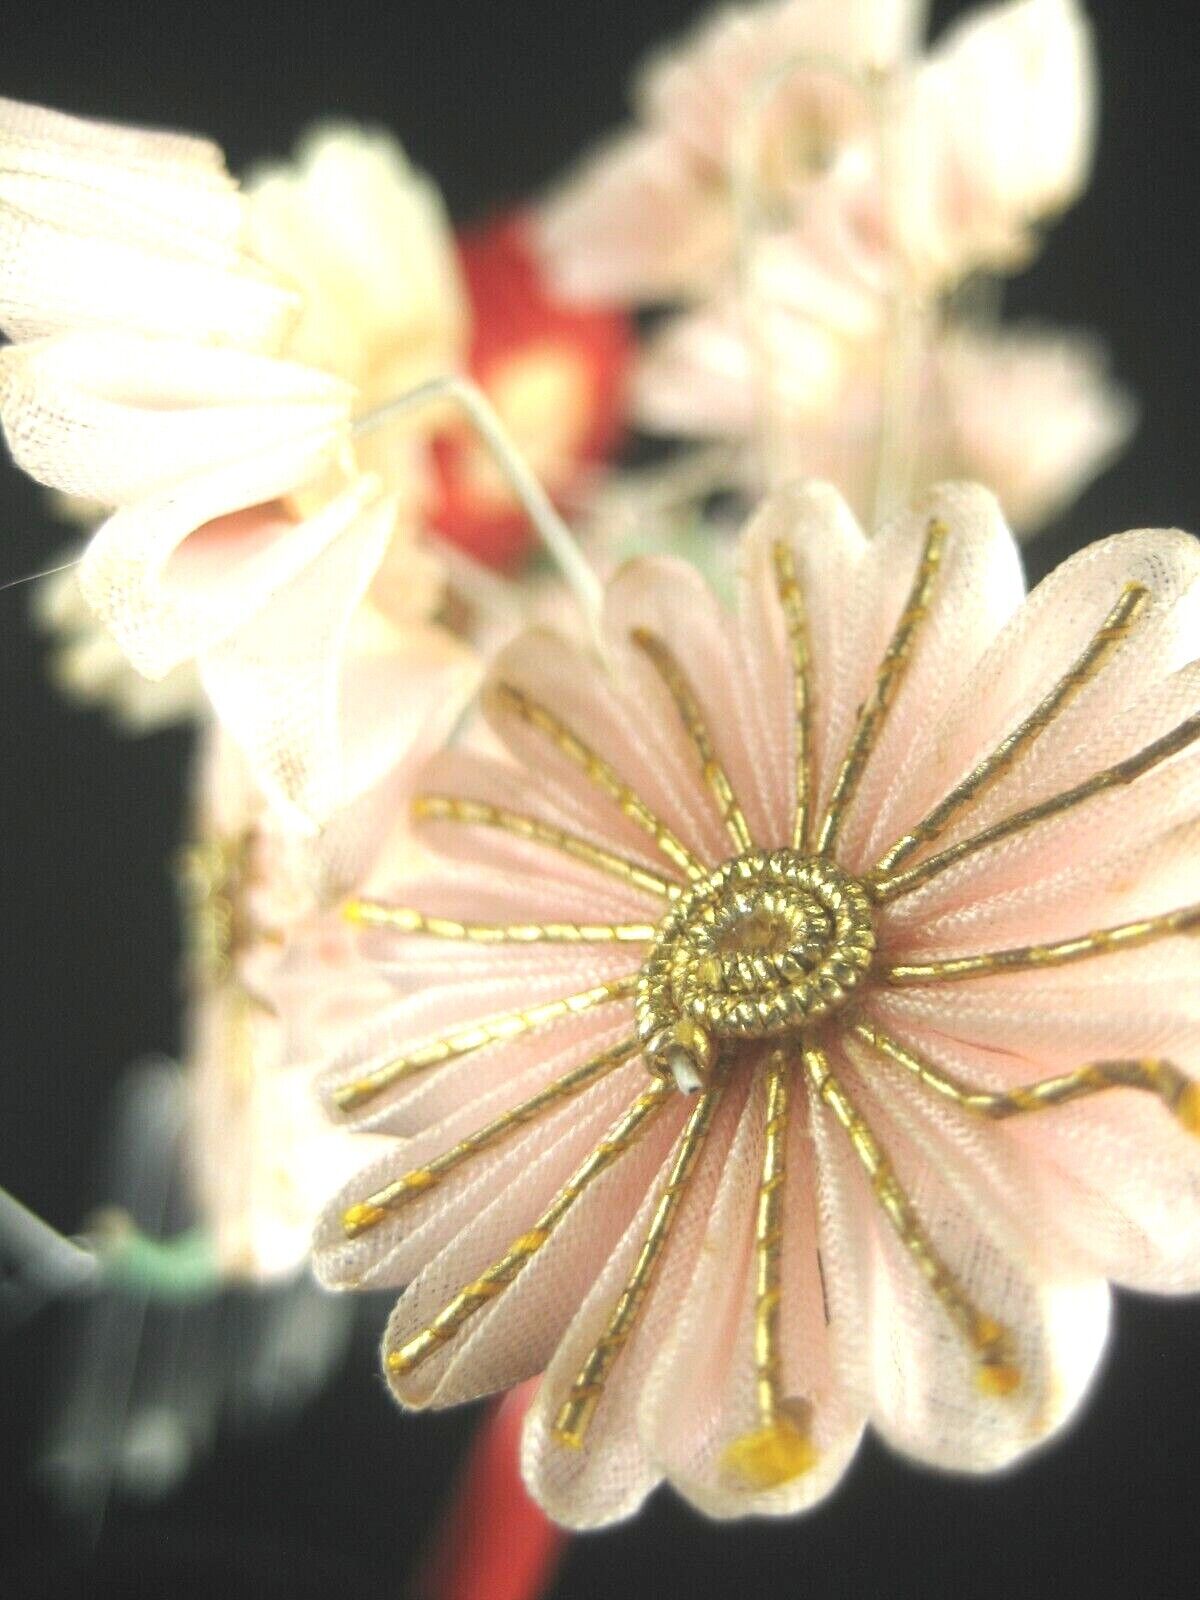 Vintage Japanese Kanzashi Geisha Style Hairpiece Flowers W/ Shiny Tassels